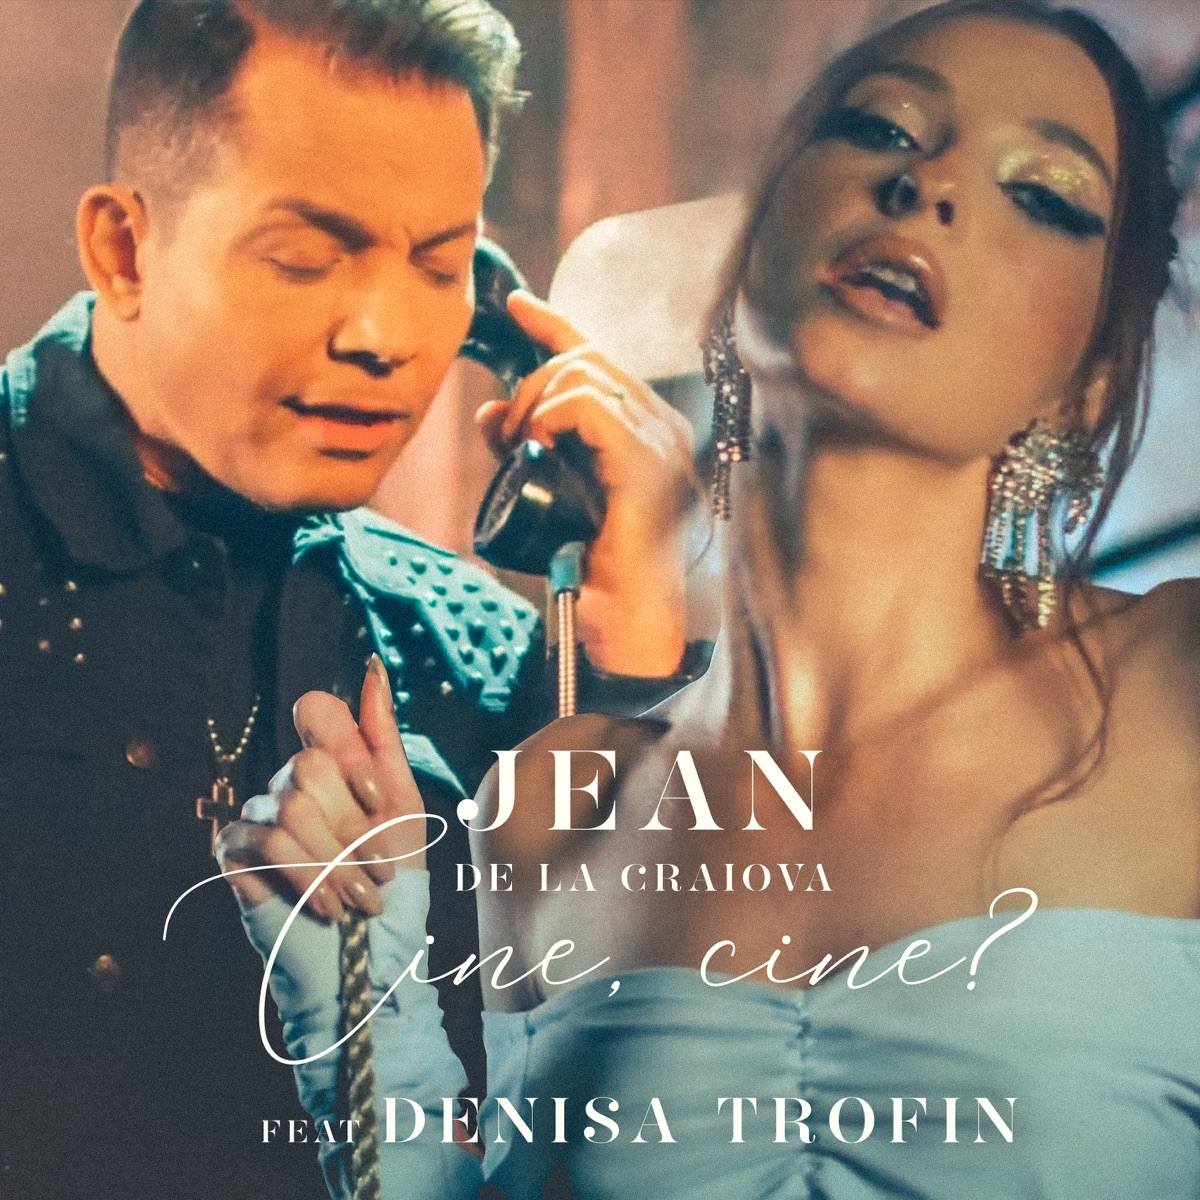 Jean De La Craiova Top Hits 2018 - Album by Jean de la Craiova - Apple Music